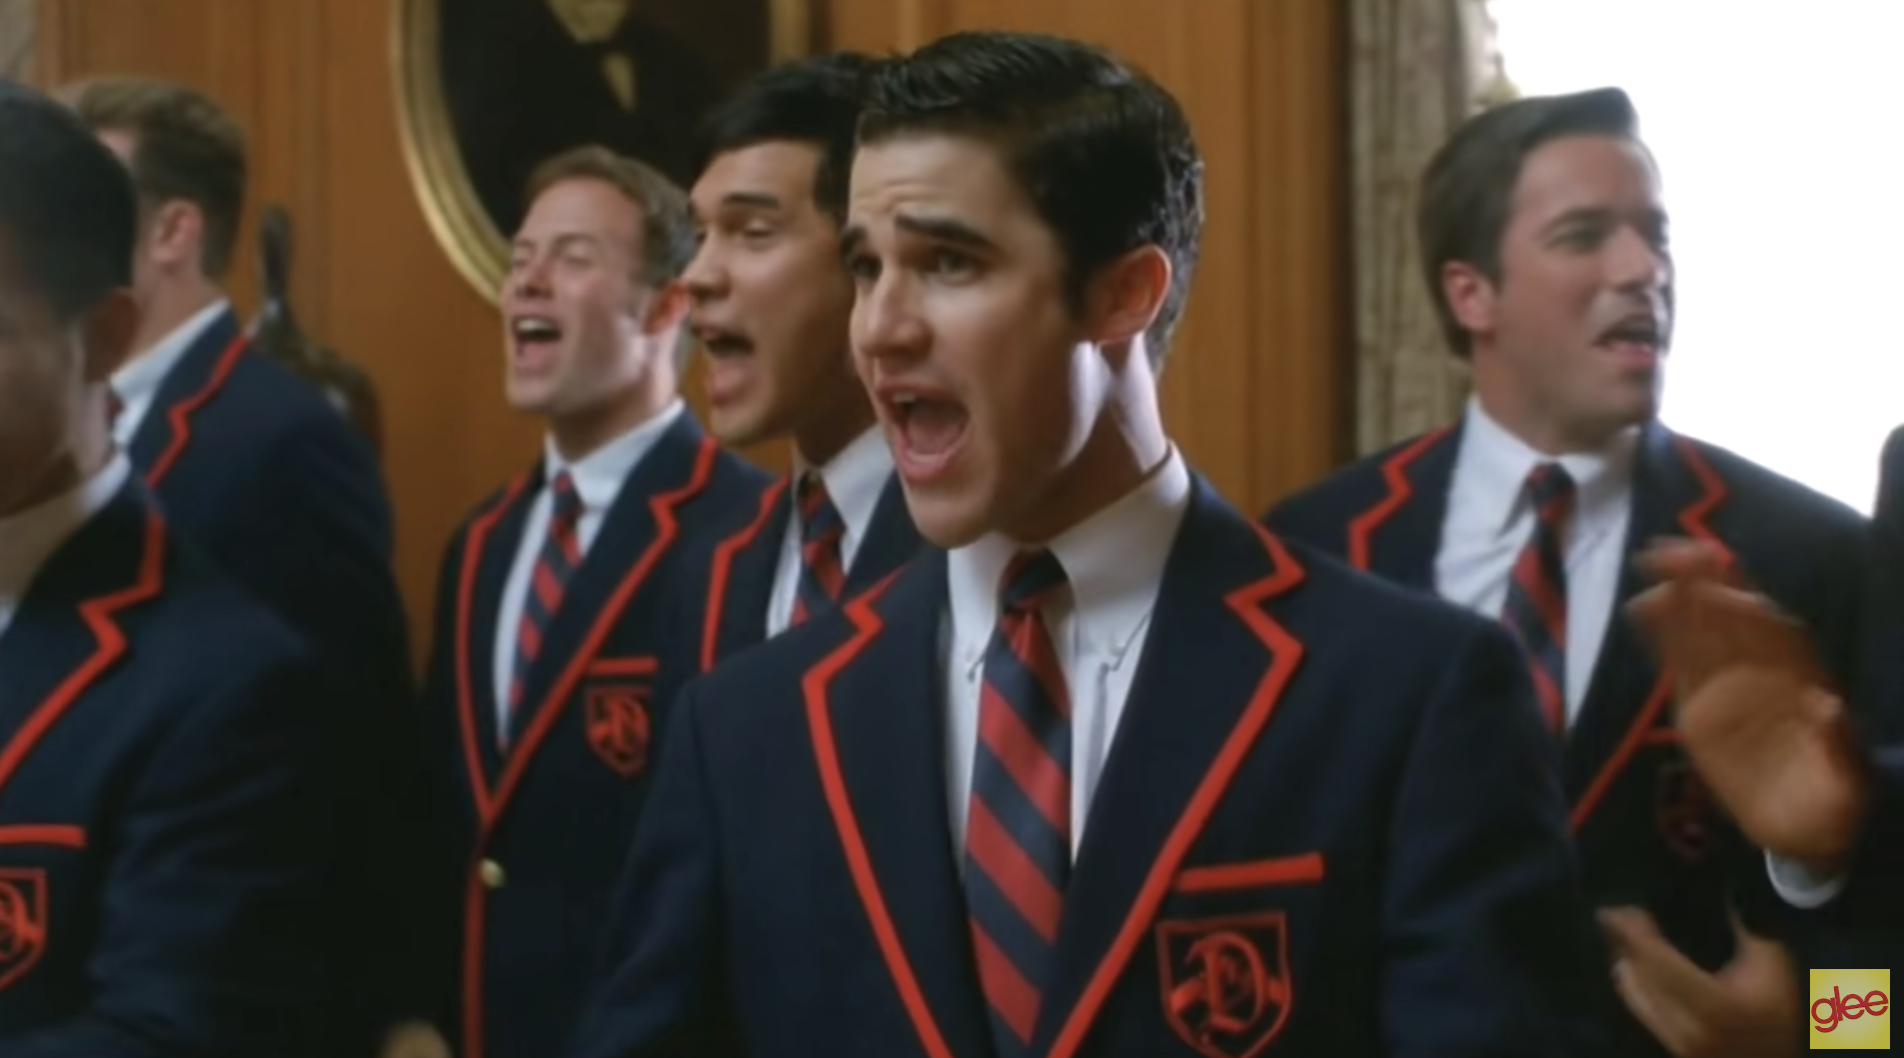 A Glee screenshot, showing Darren Criss wearing a red-and-blue uniform blazer and singing